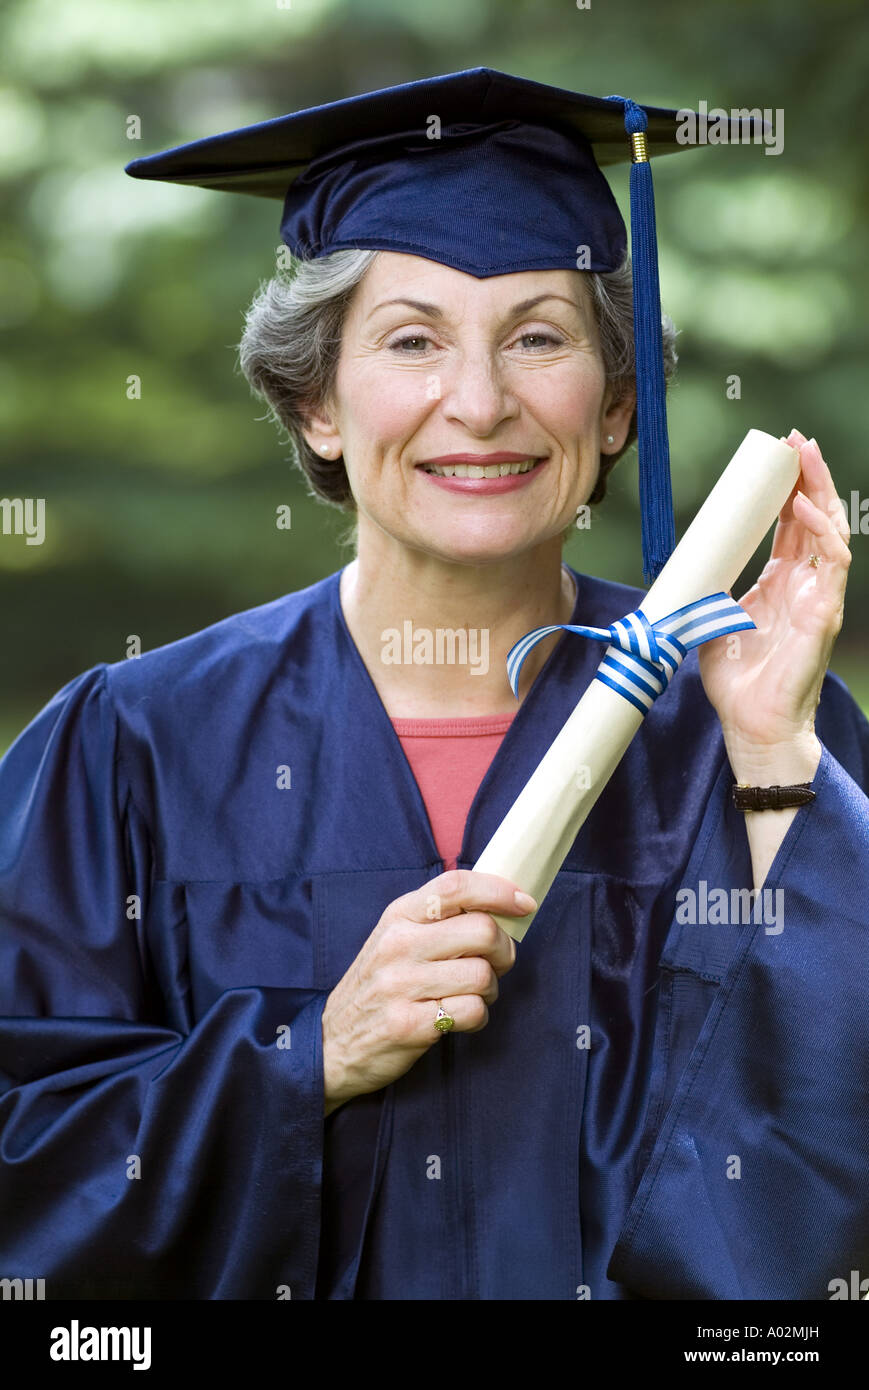 Senior woman collage graduate smiling with diploma Stock Photo